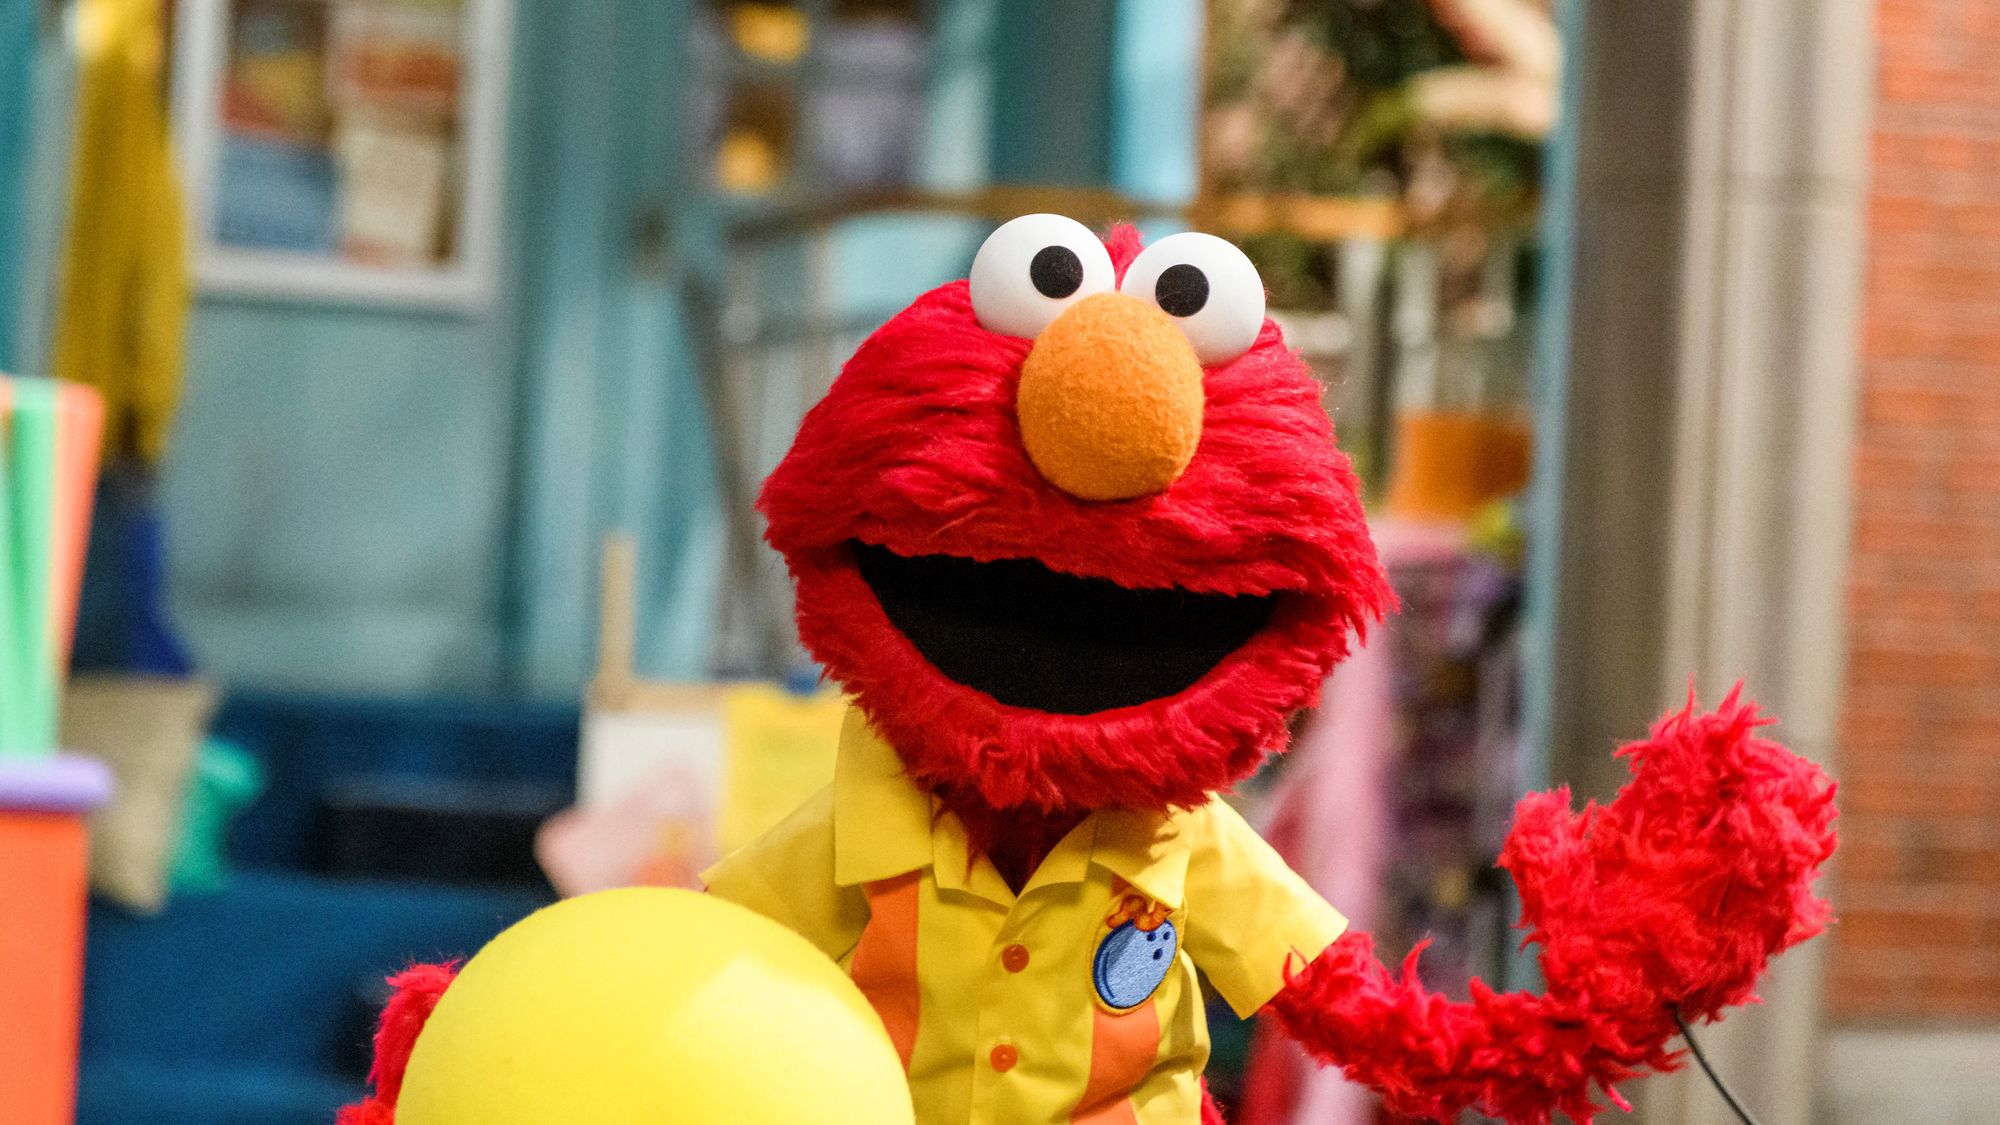 From Sesame Street to social media sensation: how Elmo captured the internet's heart